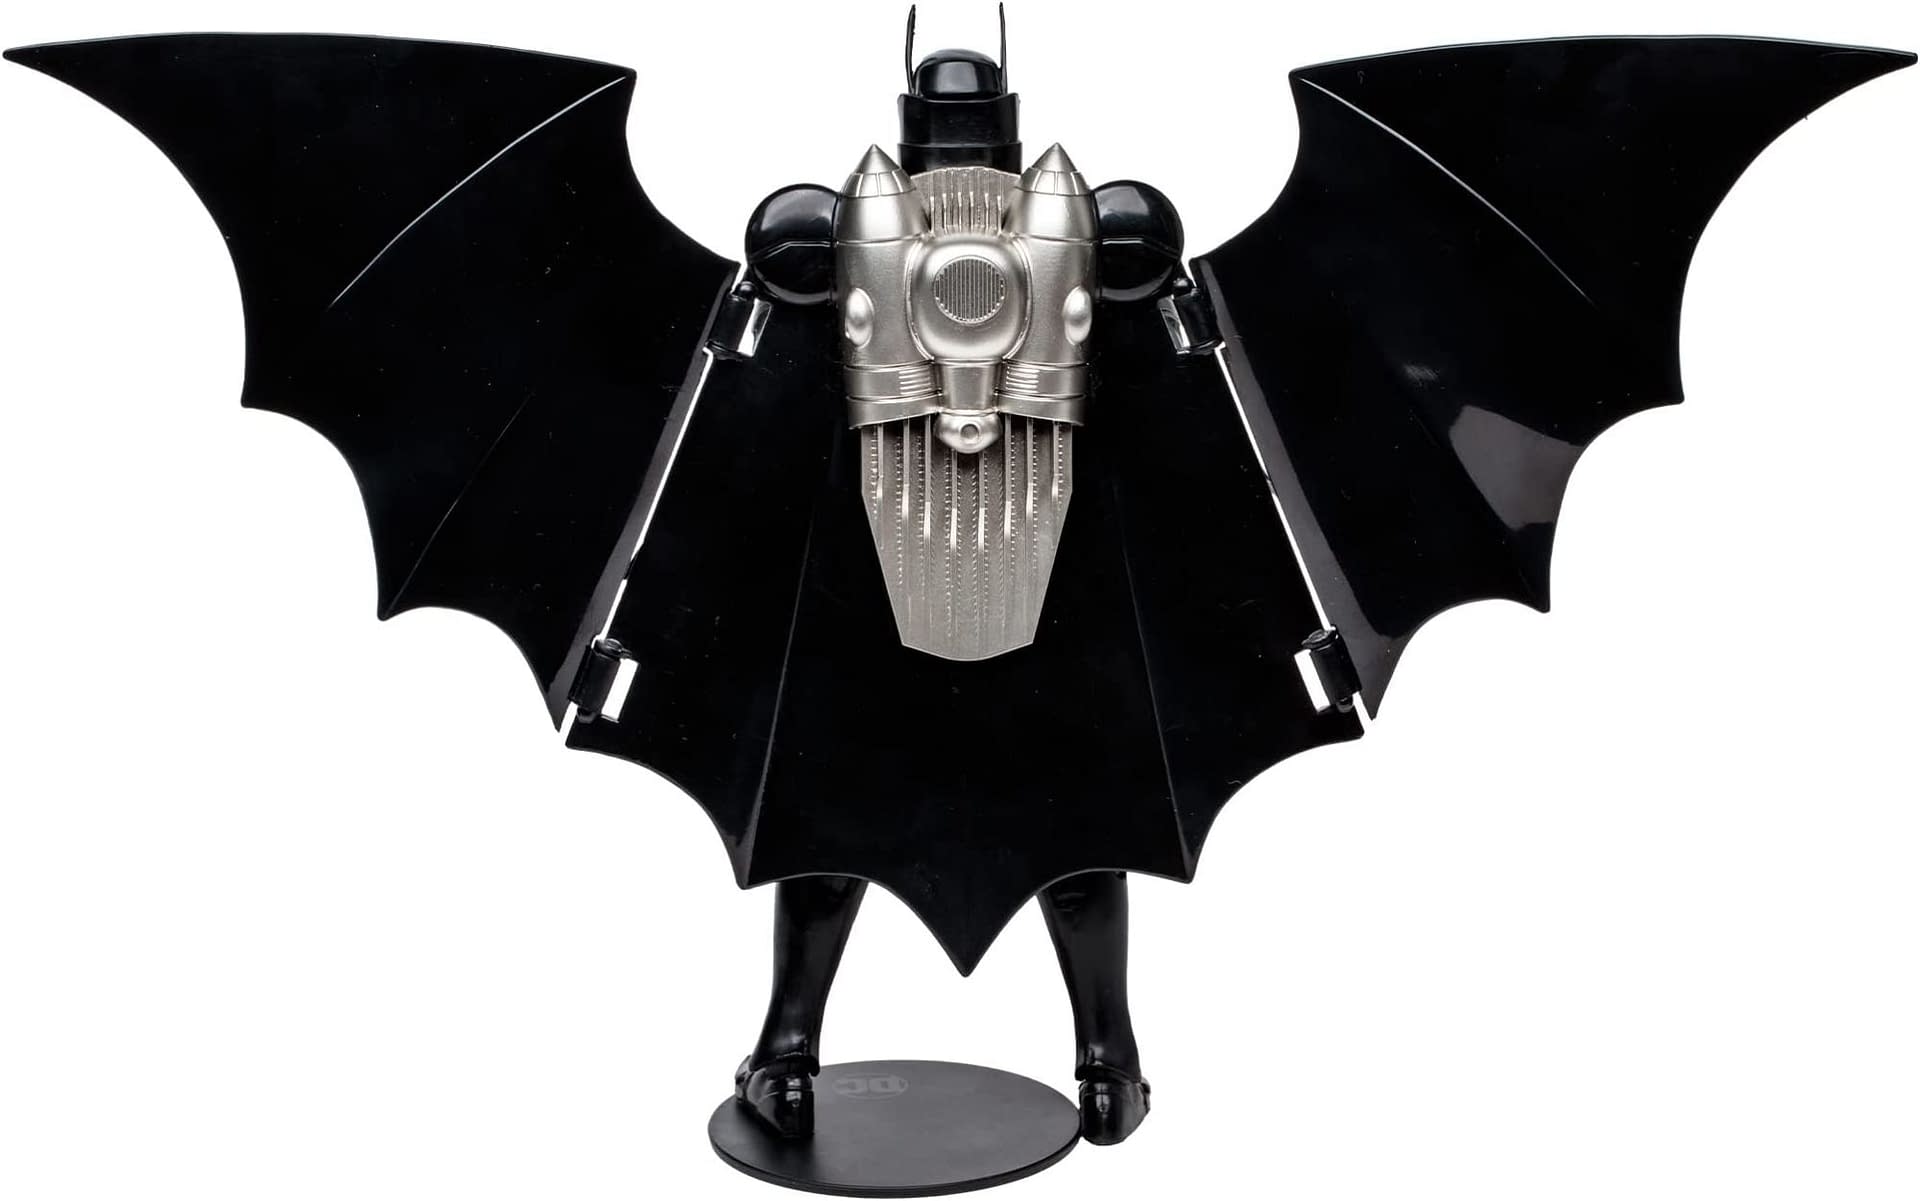 Batman Goes Gladiator with New McFarlane Toys Dark Nights Release